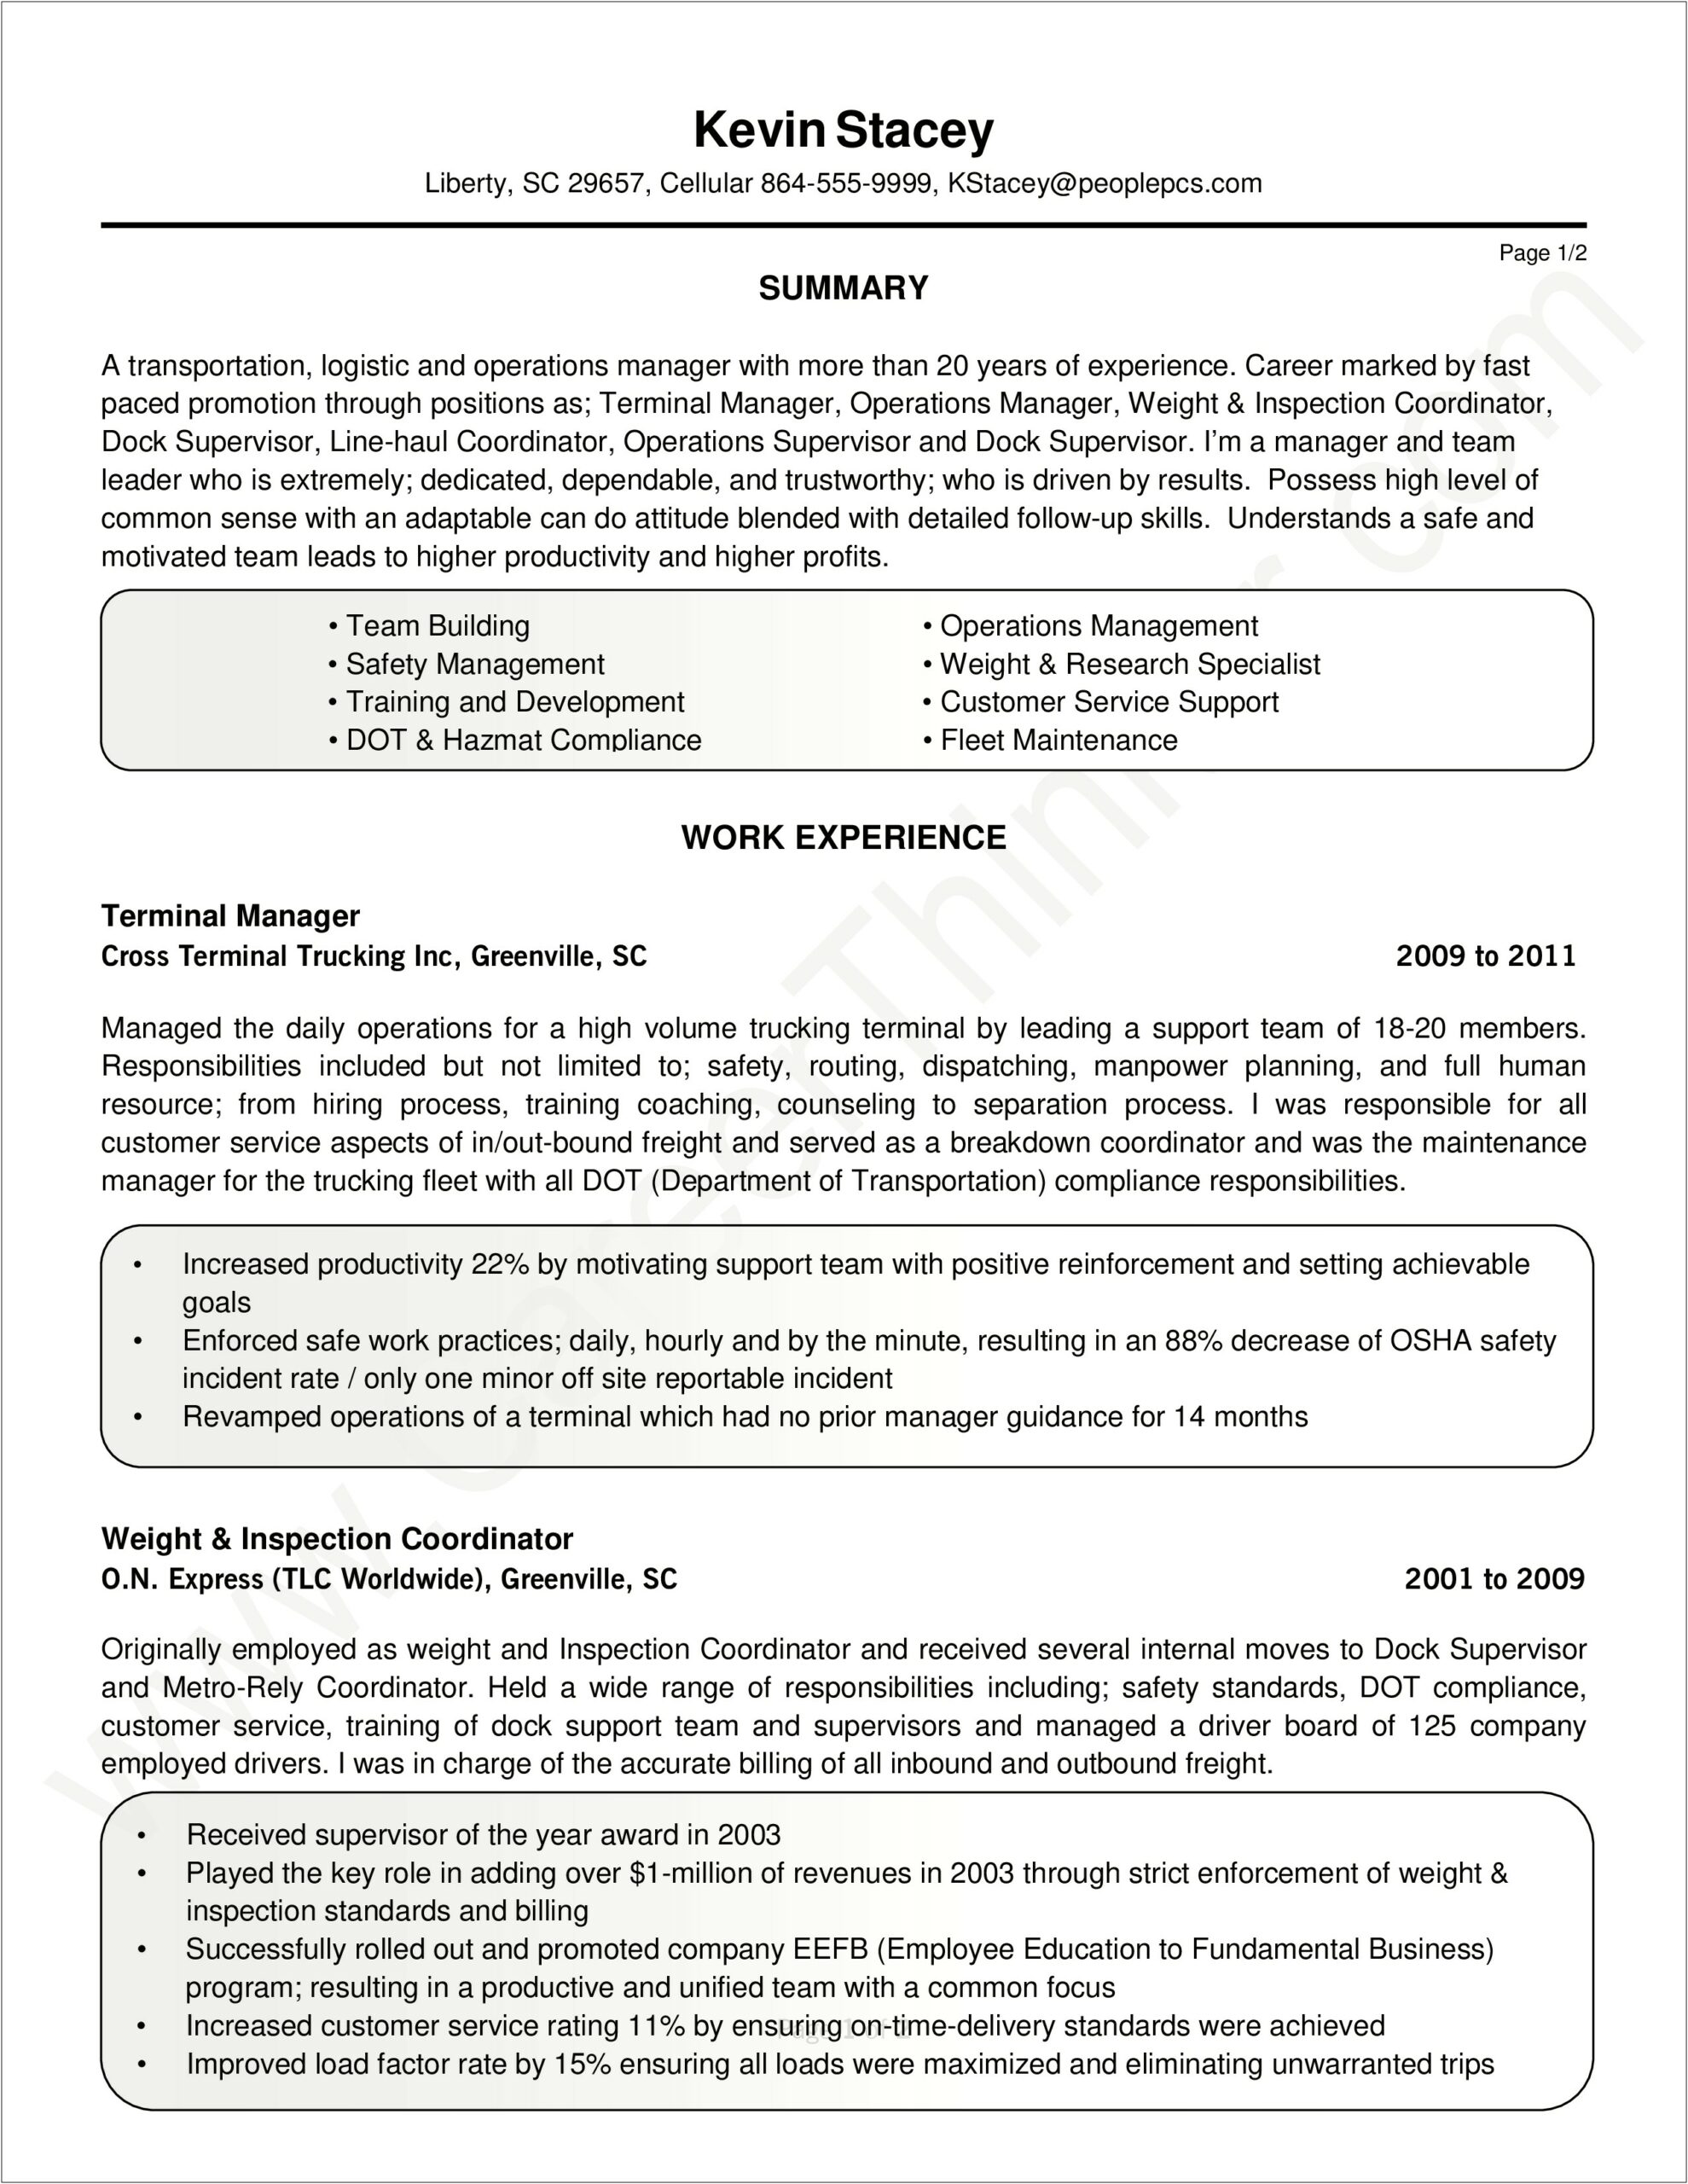 Sample Resume For Customer Service Coordinator